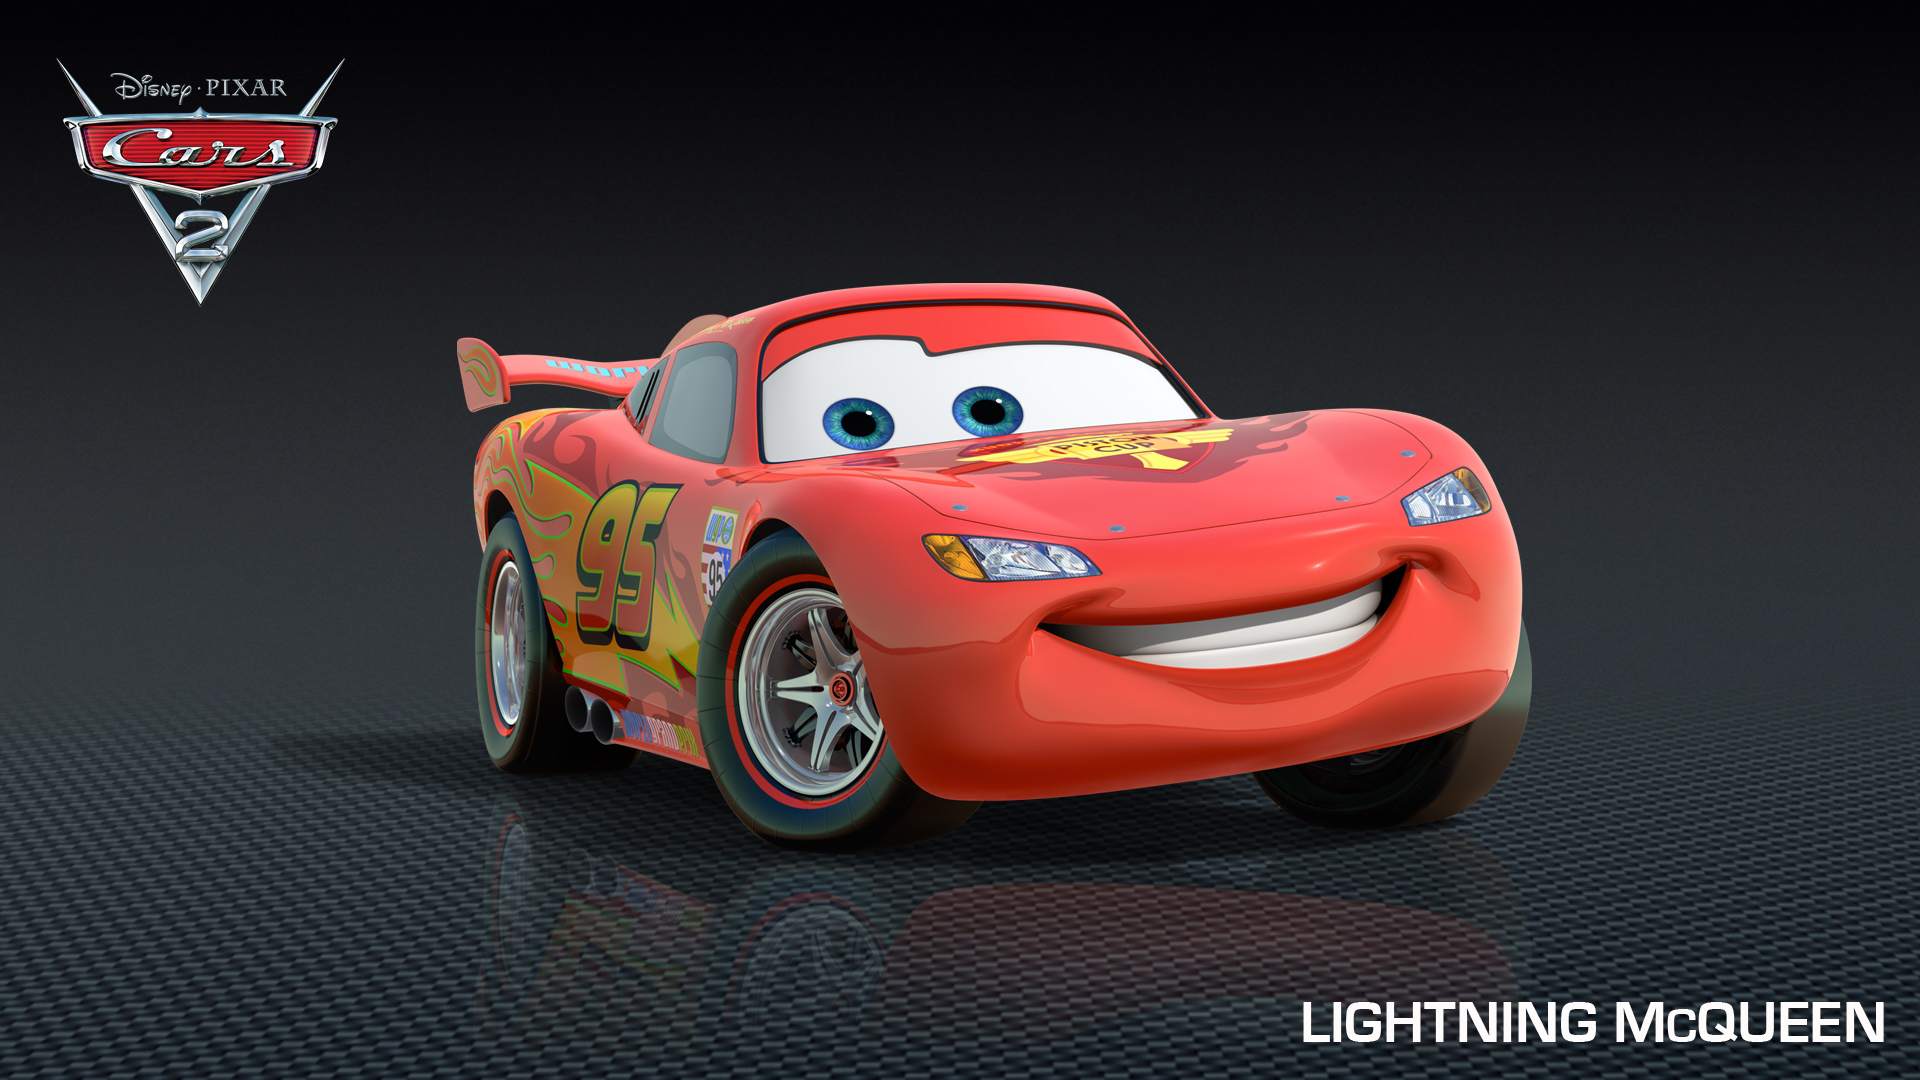 Disney Cars Movie Logo - Cars 2 Characters - Characters in Disney Pixar Cars 2